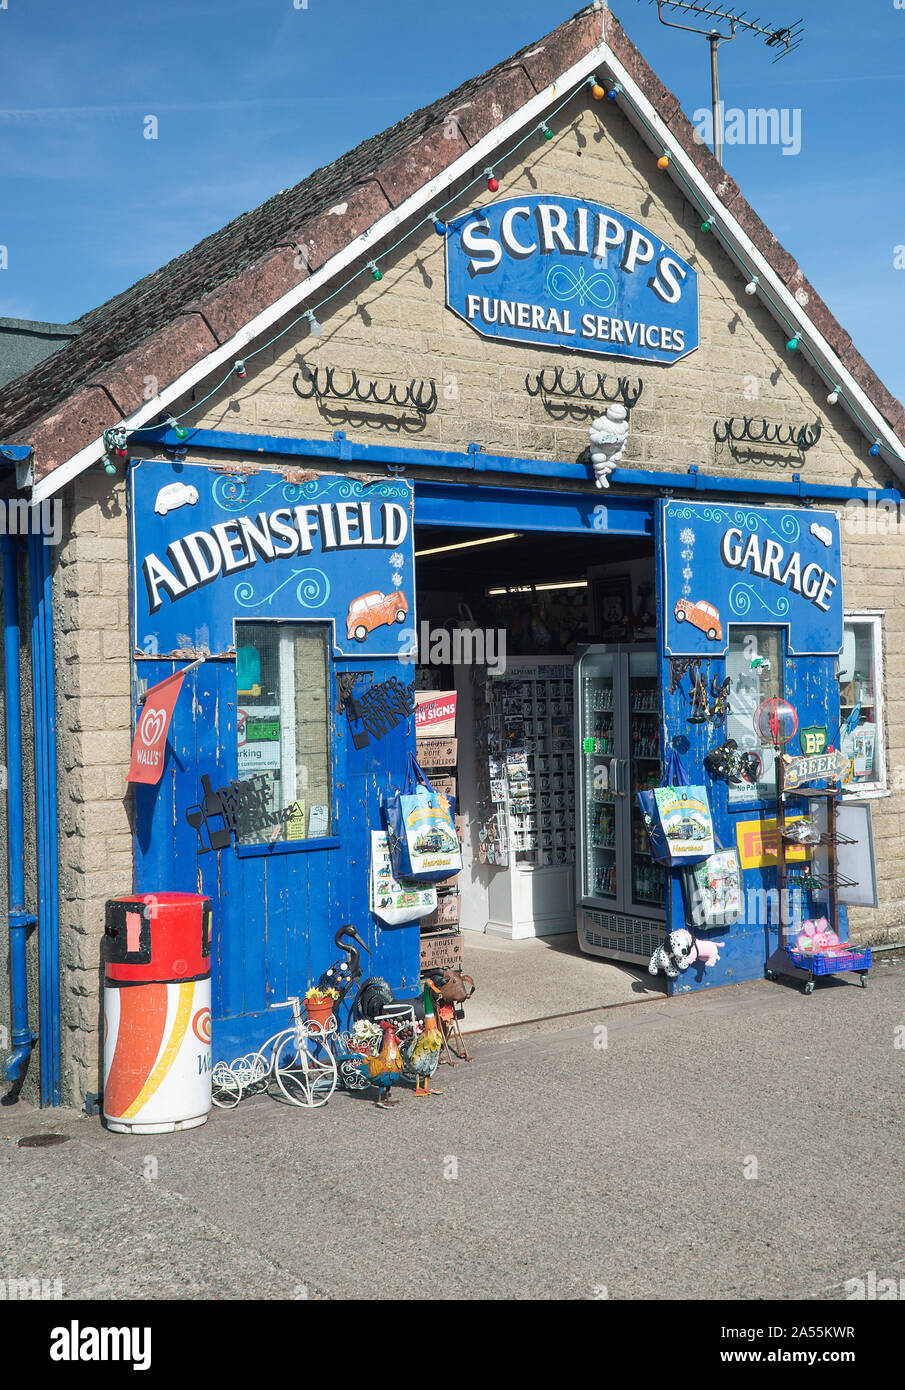 Le célèbre garage Aidensfield en vedette dans Heartbeat Television SOAP Opera à Goathland North Yorkshire England United Gingdom UK Banque D'Images